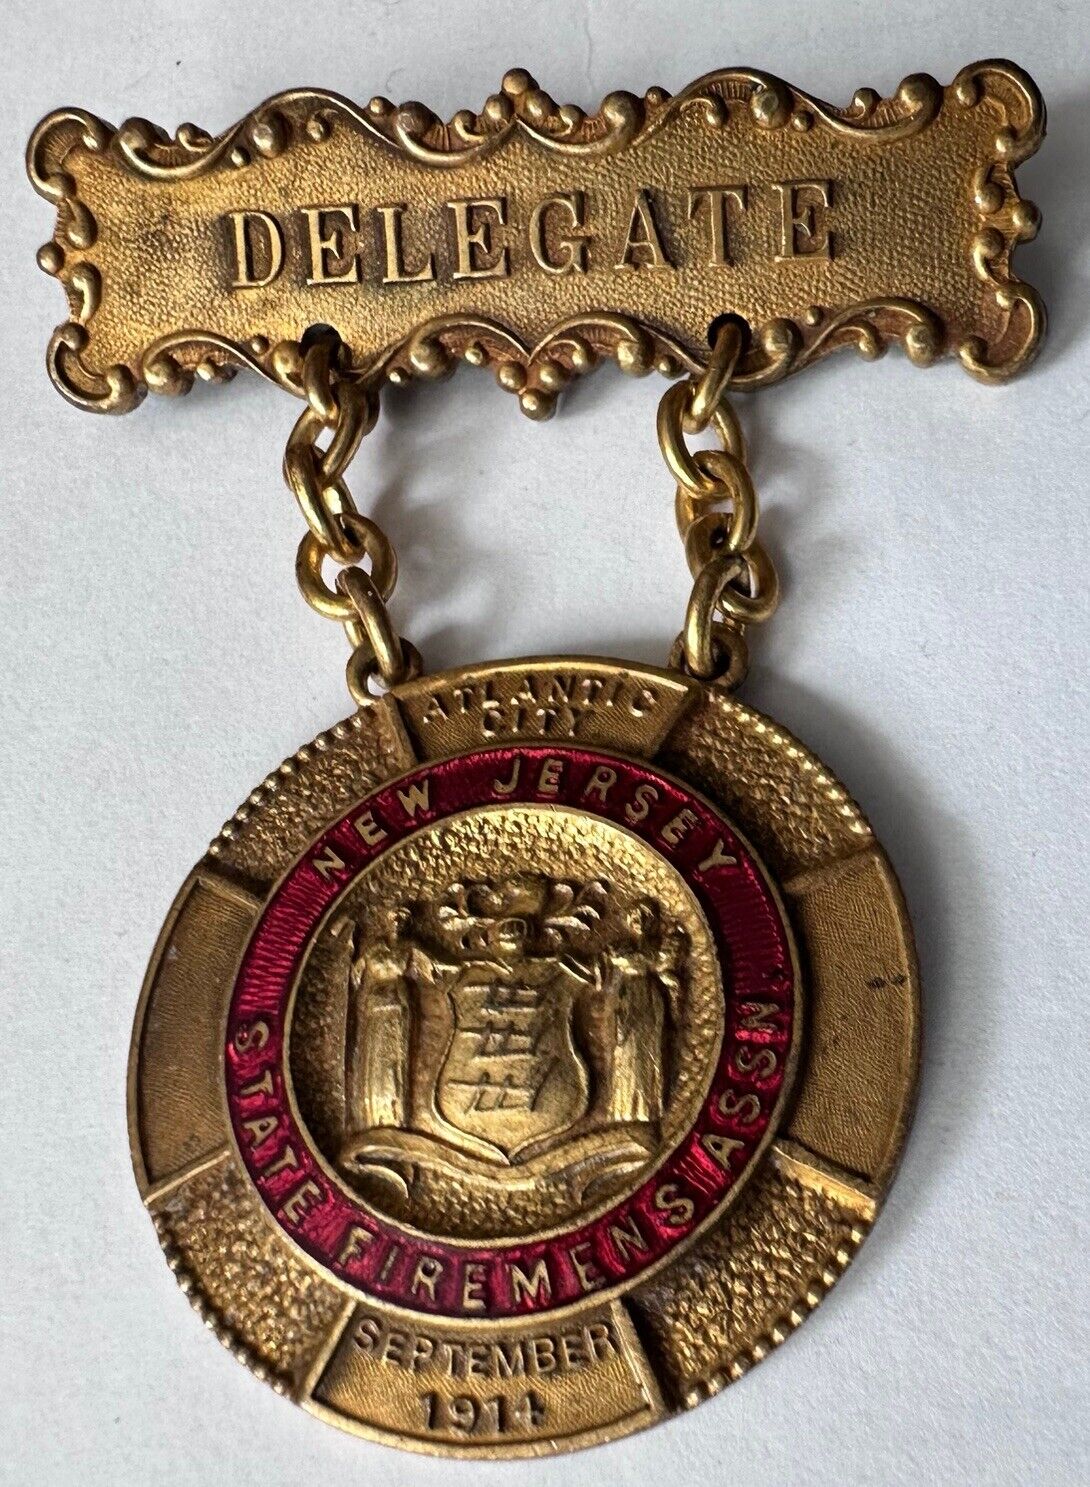 1914 New Jersey State Fireman Association Atlantic City Delegate Pinback Medal